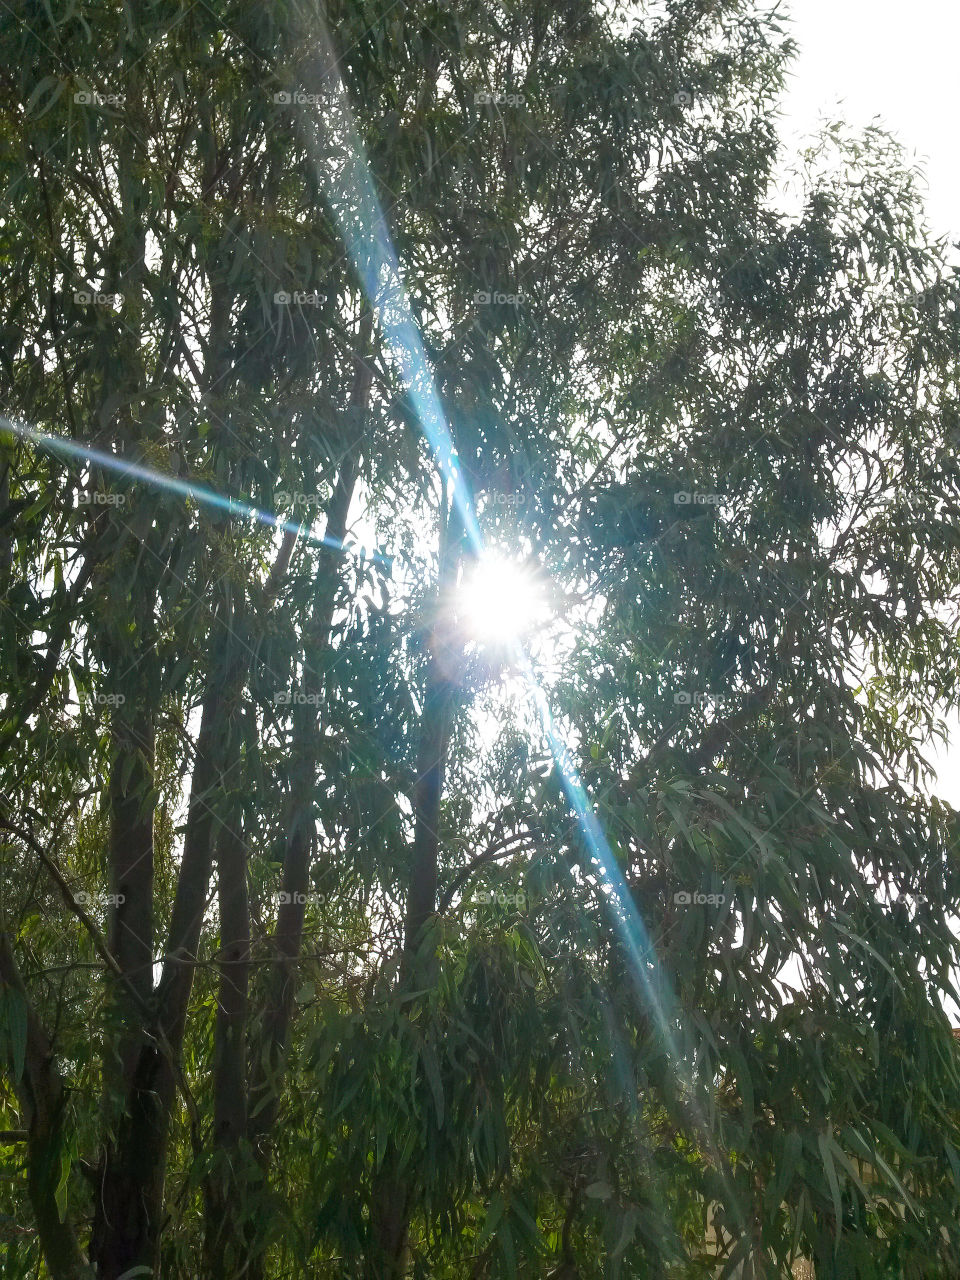 tipical sardinian willow over a warm mediterranean Sunlight